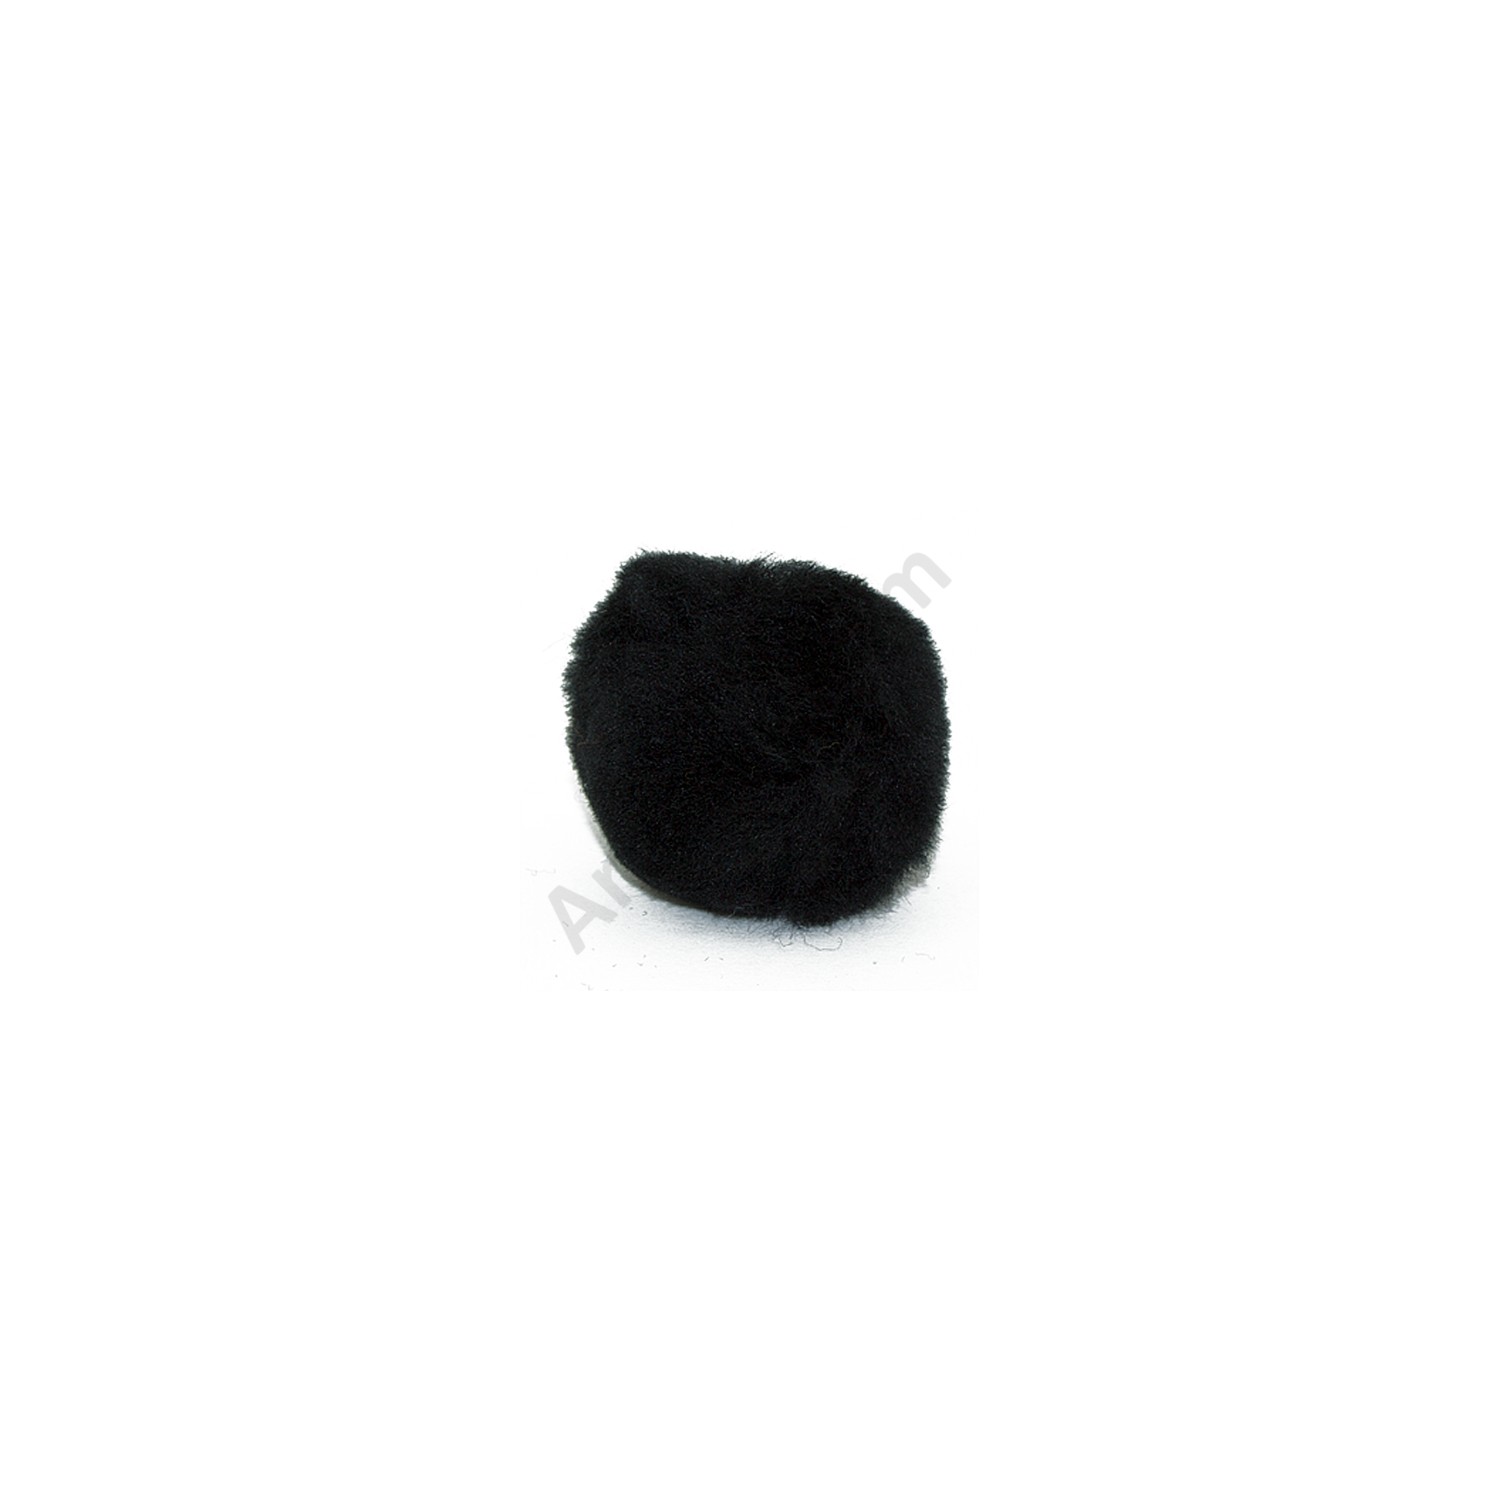 1-1/2 inch Black Craft Pom Poms 50 Pieces Pom Pom Balls